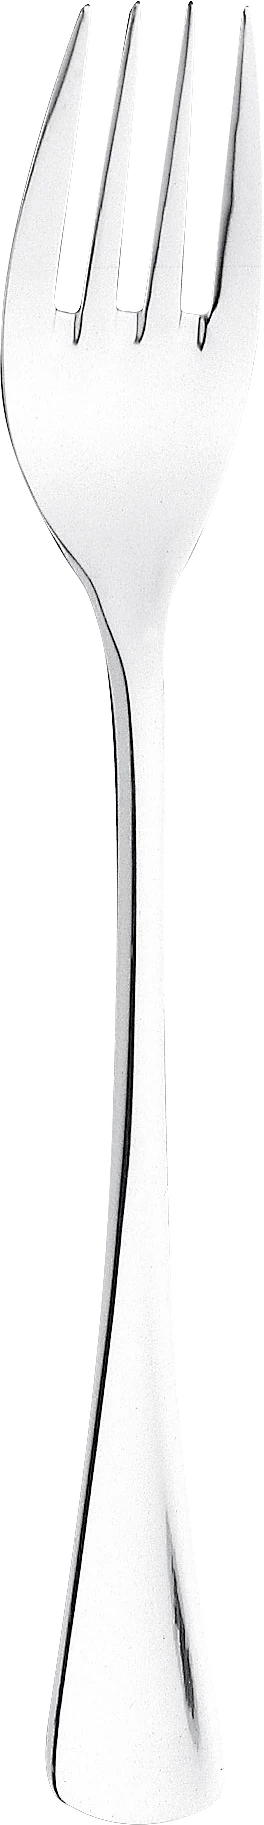 Walzer spisegaffel, 19,6 cm